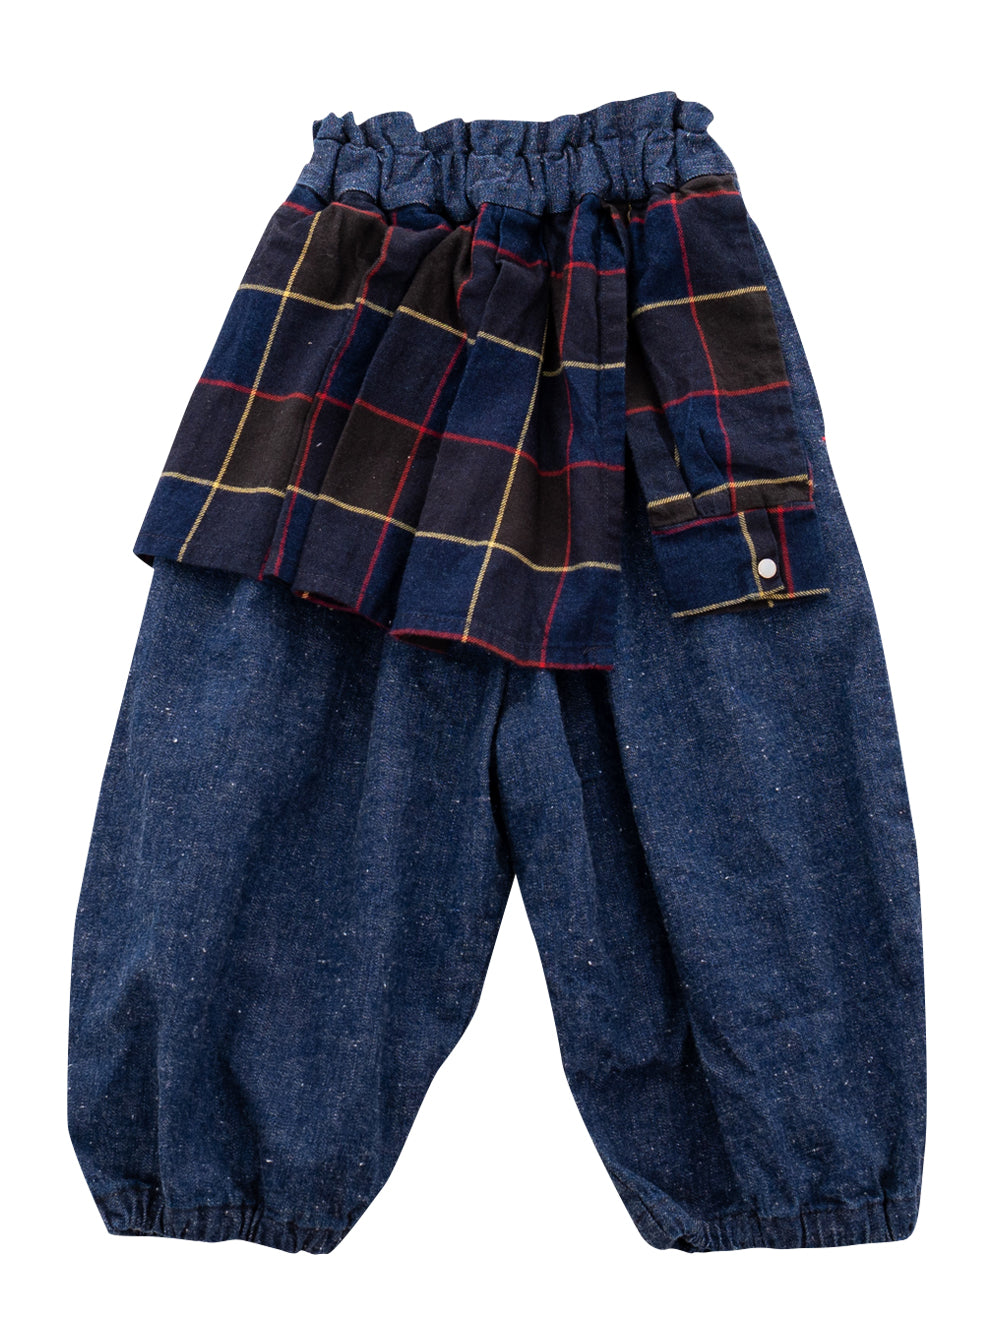 NWT DDILKE Boys Plaid Pajama Pants Brown and Orange Check Style XL | eBay